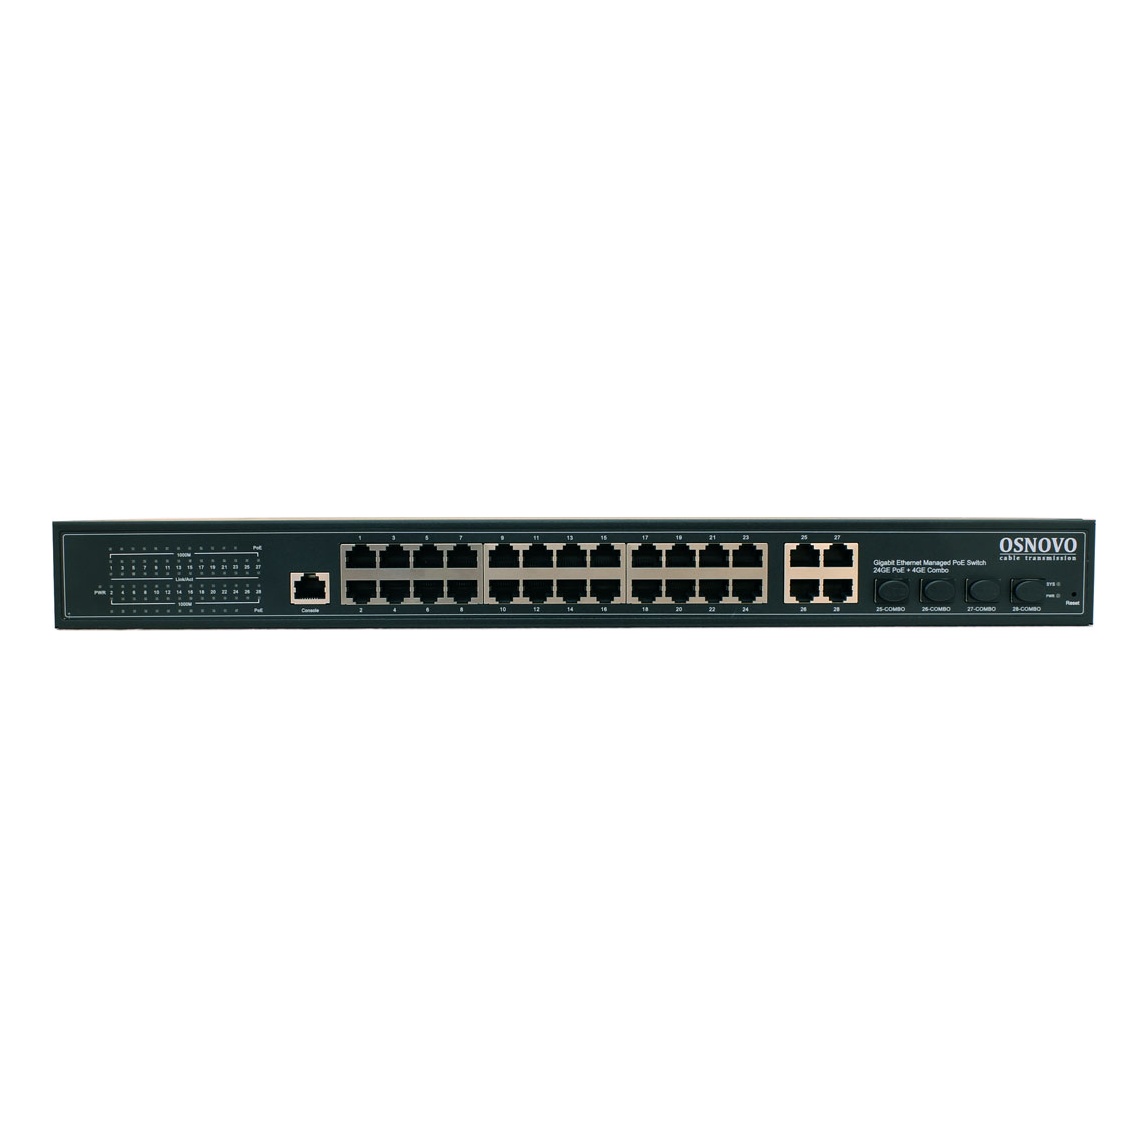 OSNOVO SW-8244/L(400W) SW-8244/L(400W) Управляемый L2 PoE коммутатор Gigabit Ethernet на 24 RJ45 PoE + 4 x GE Combo Uplink порта